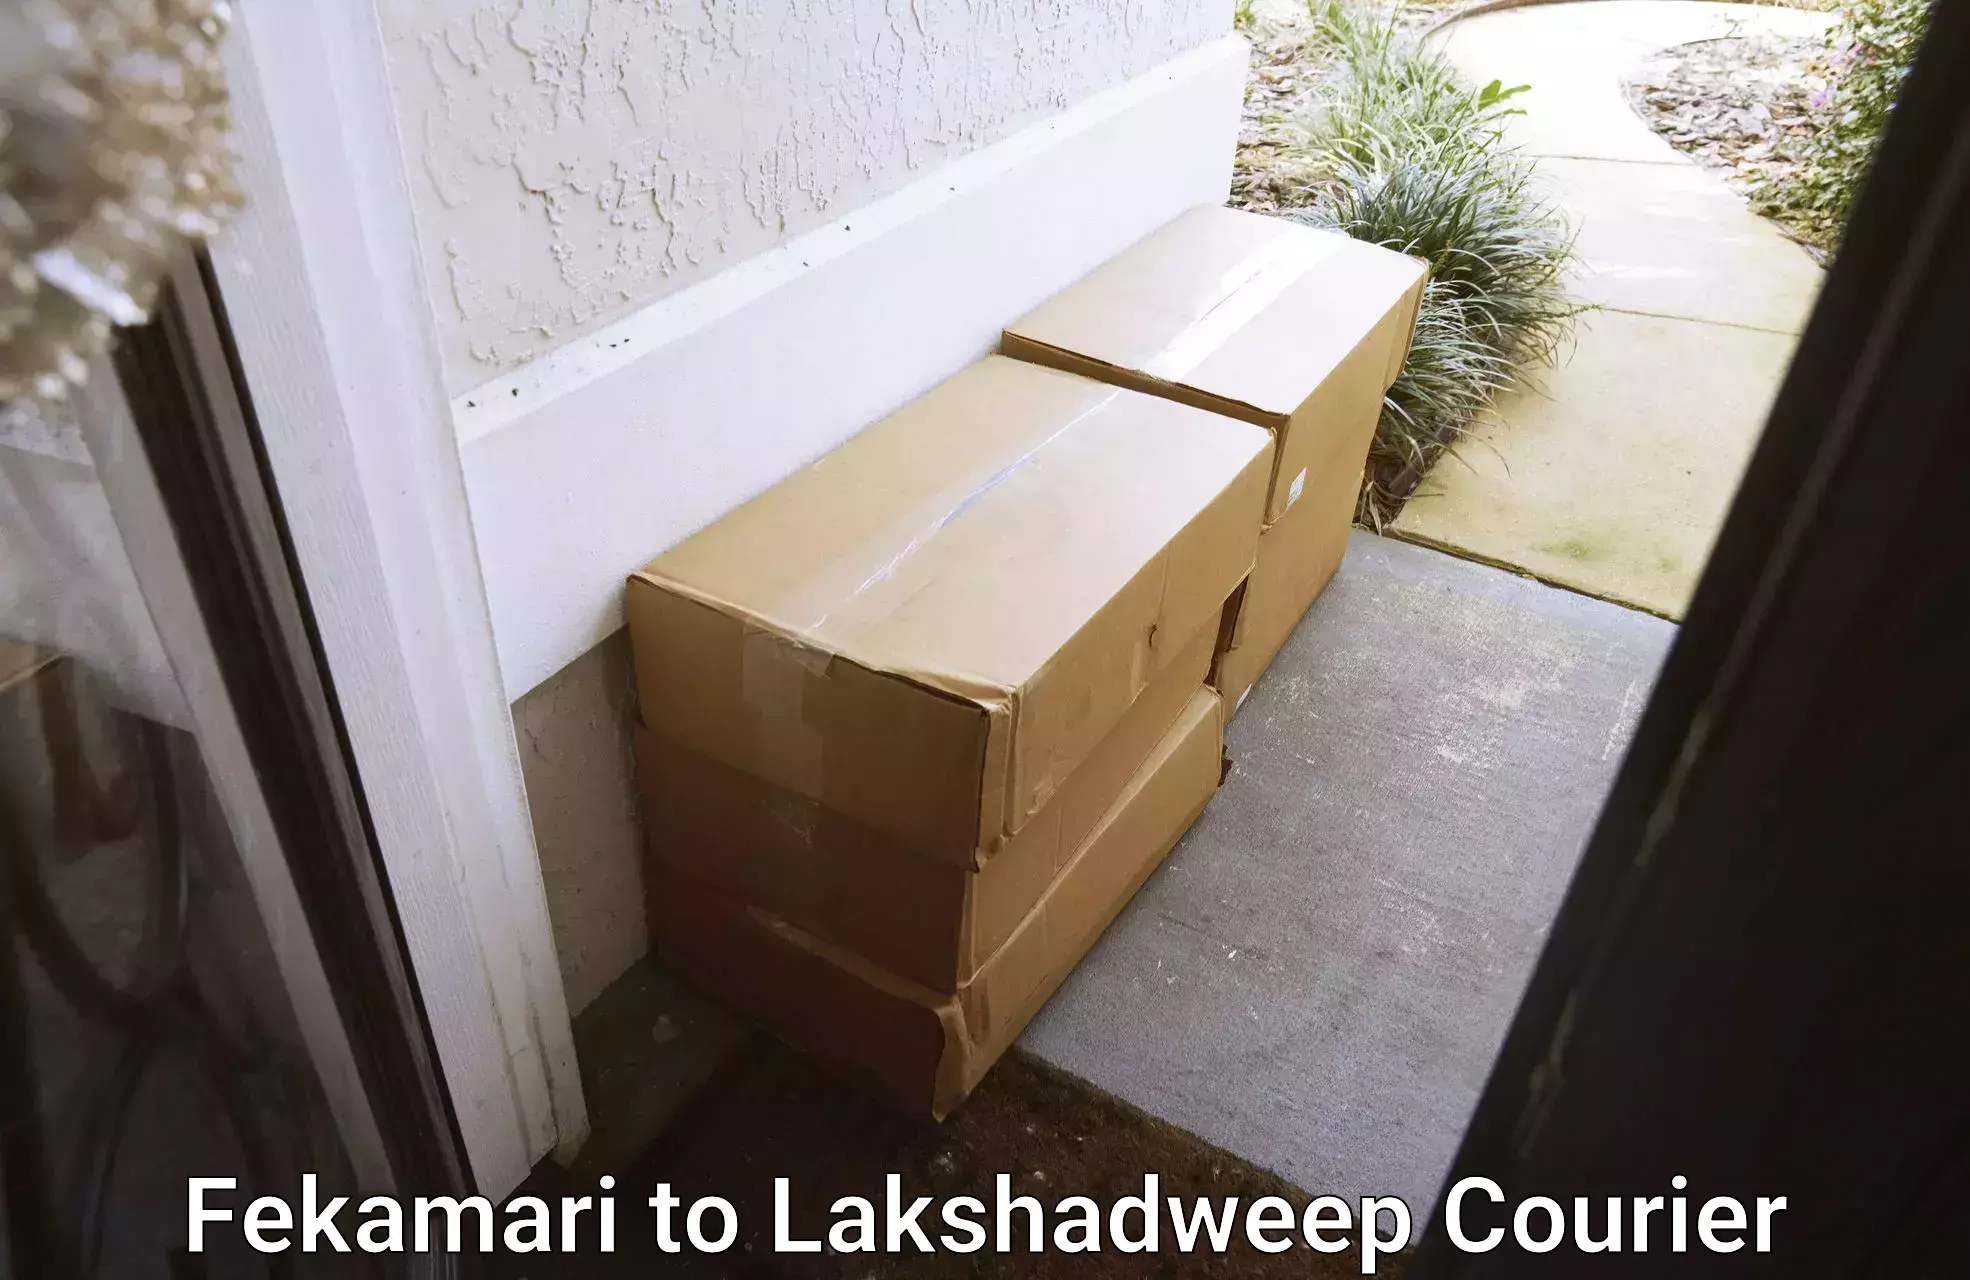 Supply chain delivery Fekamari to Lakshadweep